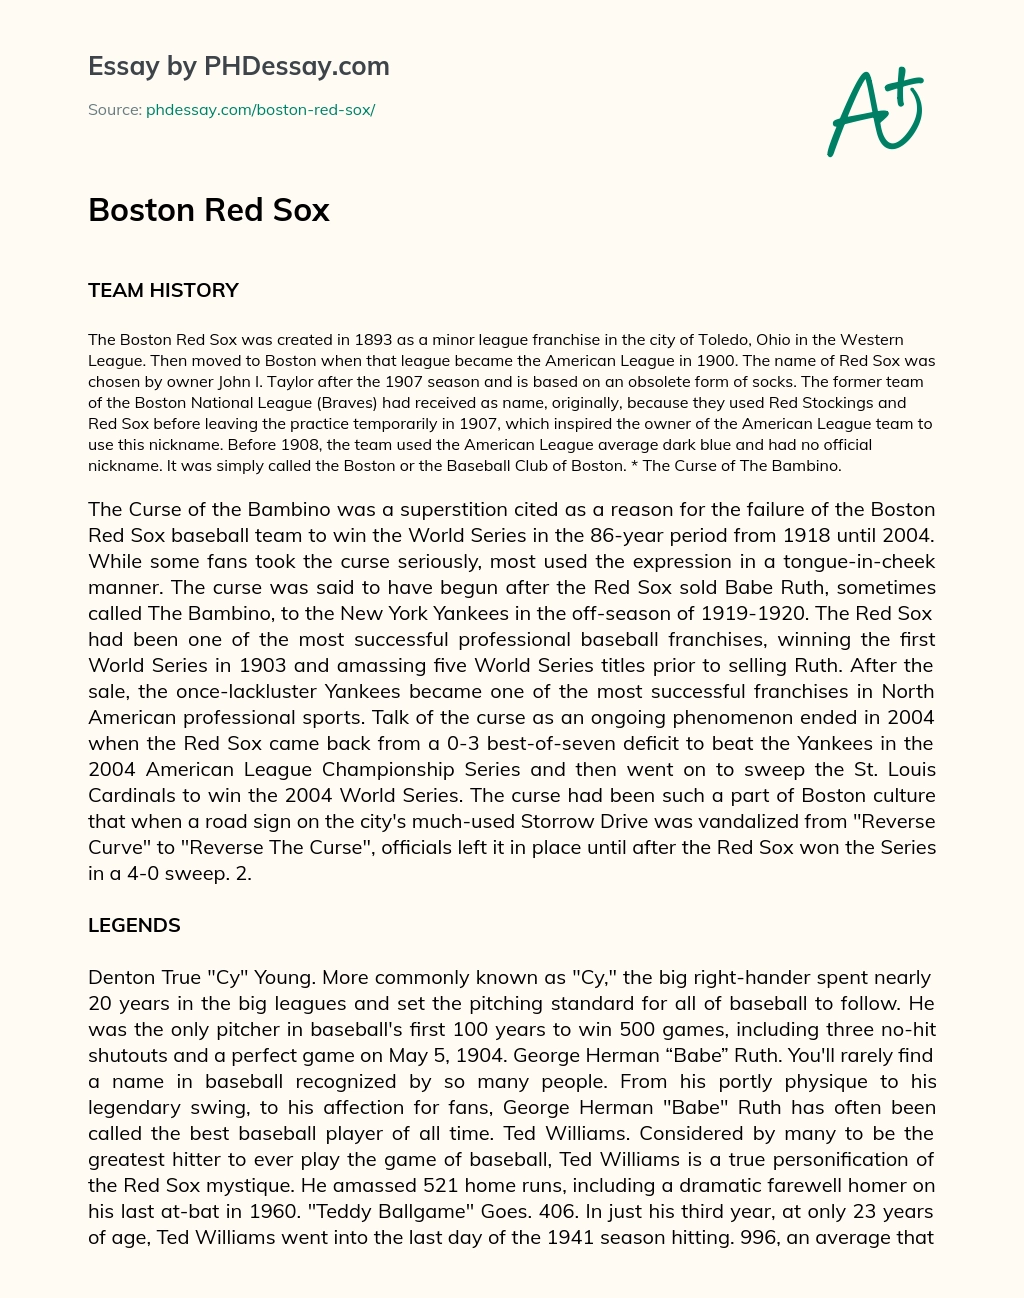 Boston Red Sox essay